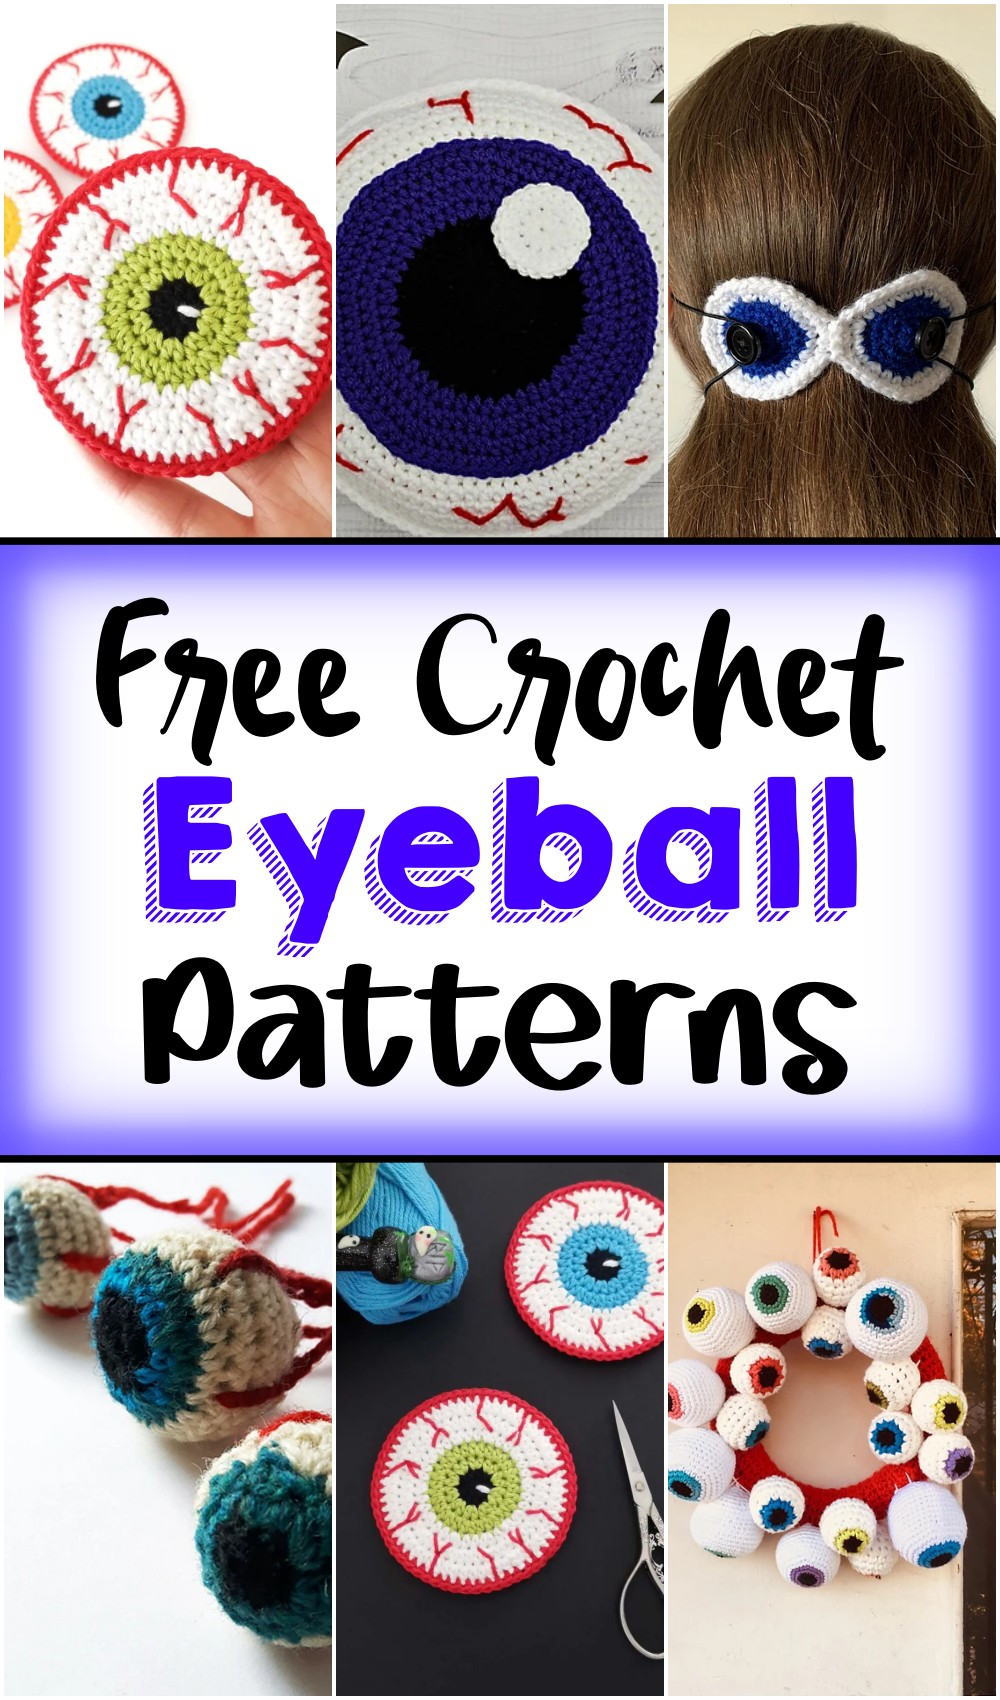 Free Crochet Eyeball Patterns In This Halloween